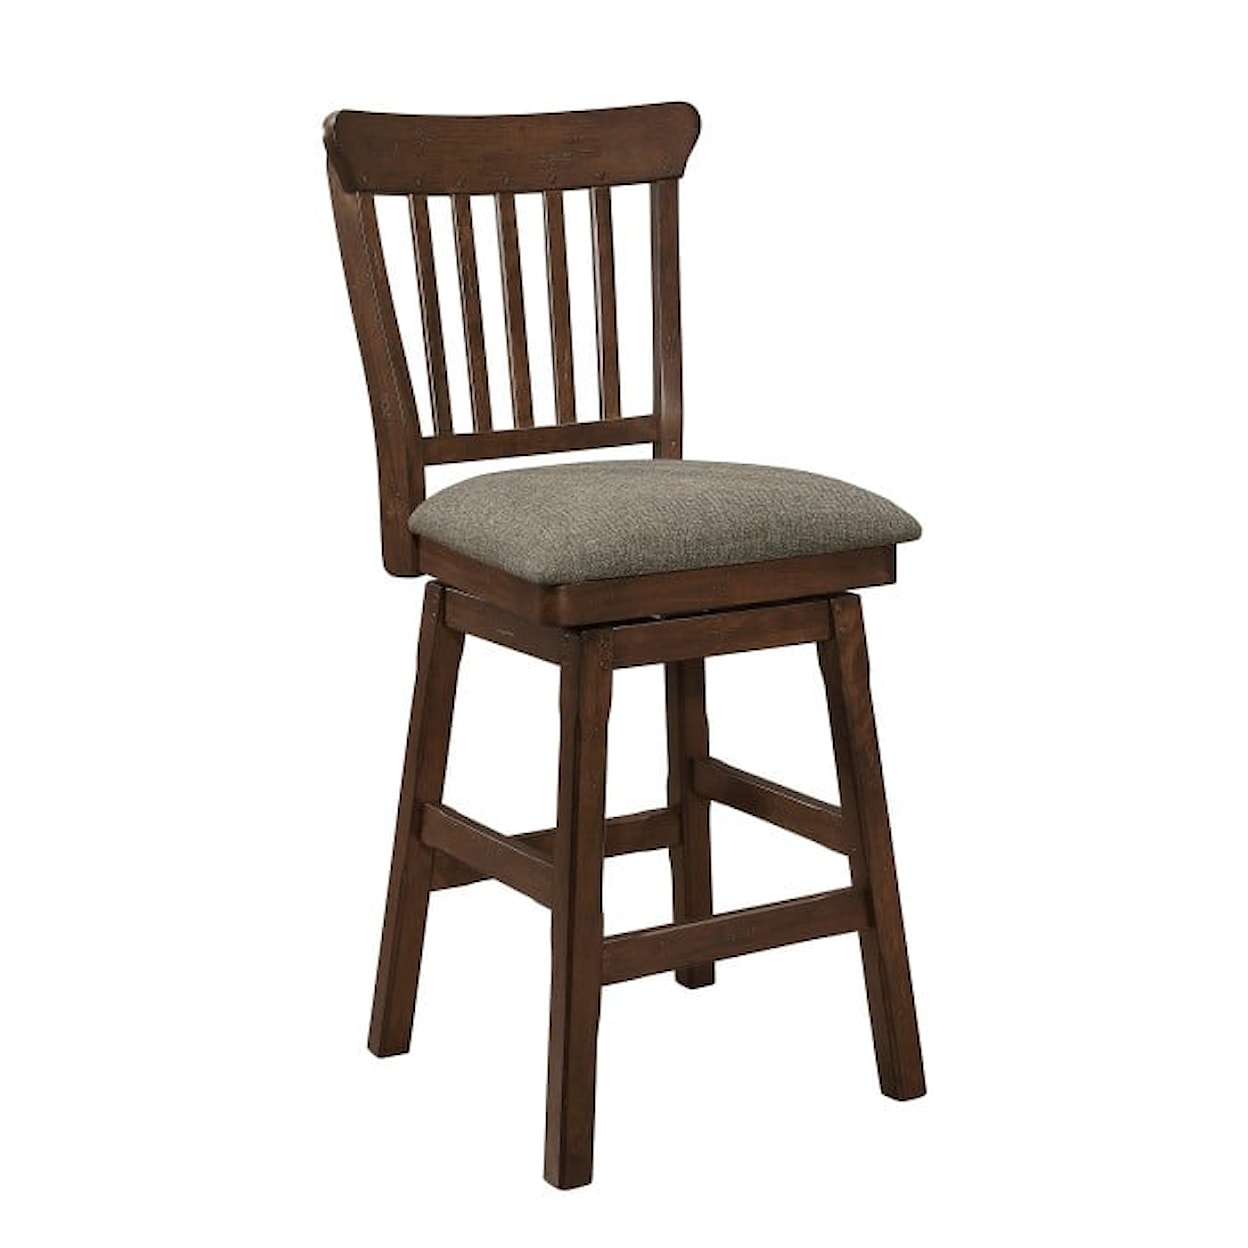 Homelegance Schleiger Counter Height Swivel Chair